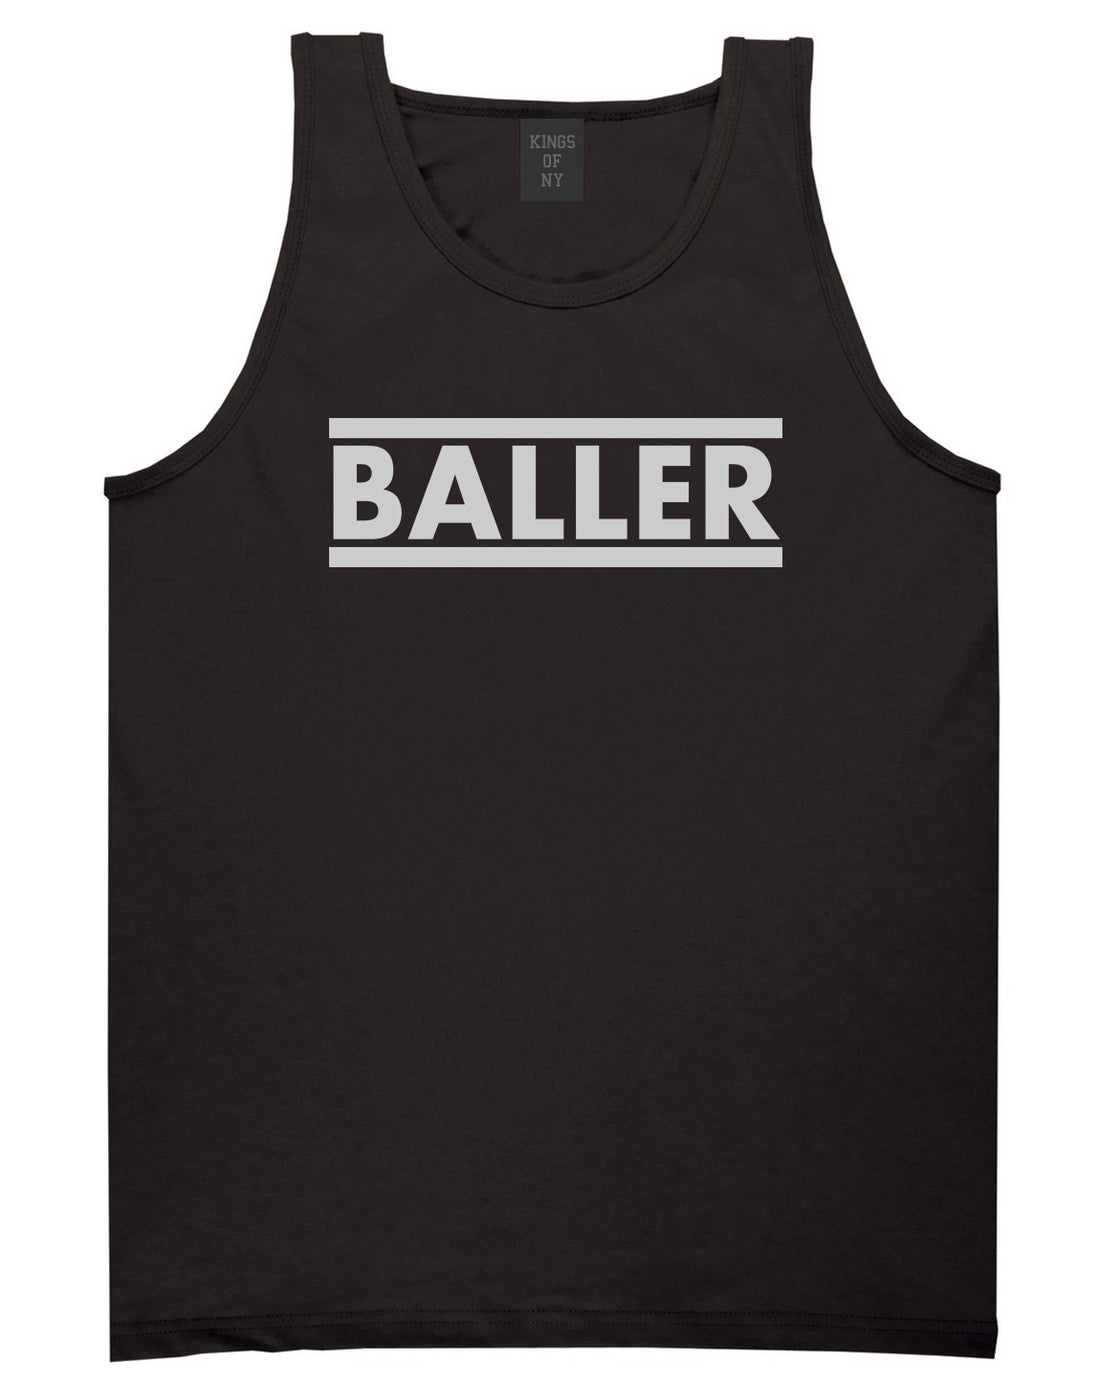 Baller Black Tank Top Shirt by Kings Of NY